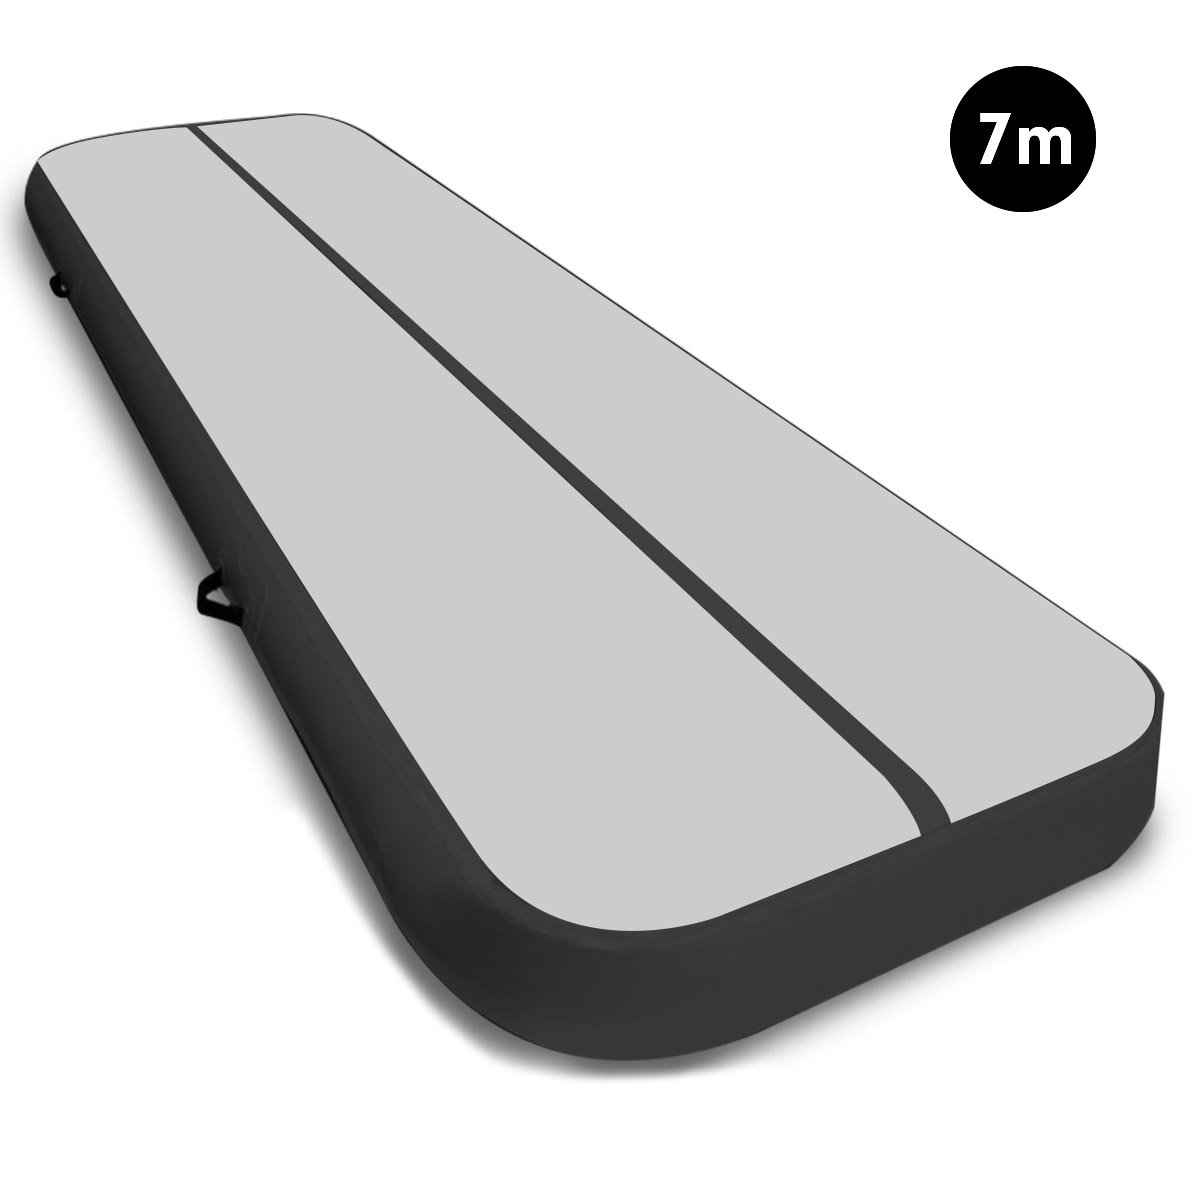 7m x 1m Air Track Inflatable Tumbling Mat Gymnastics - Grey Black 1